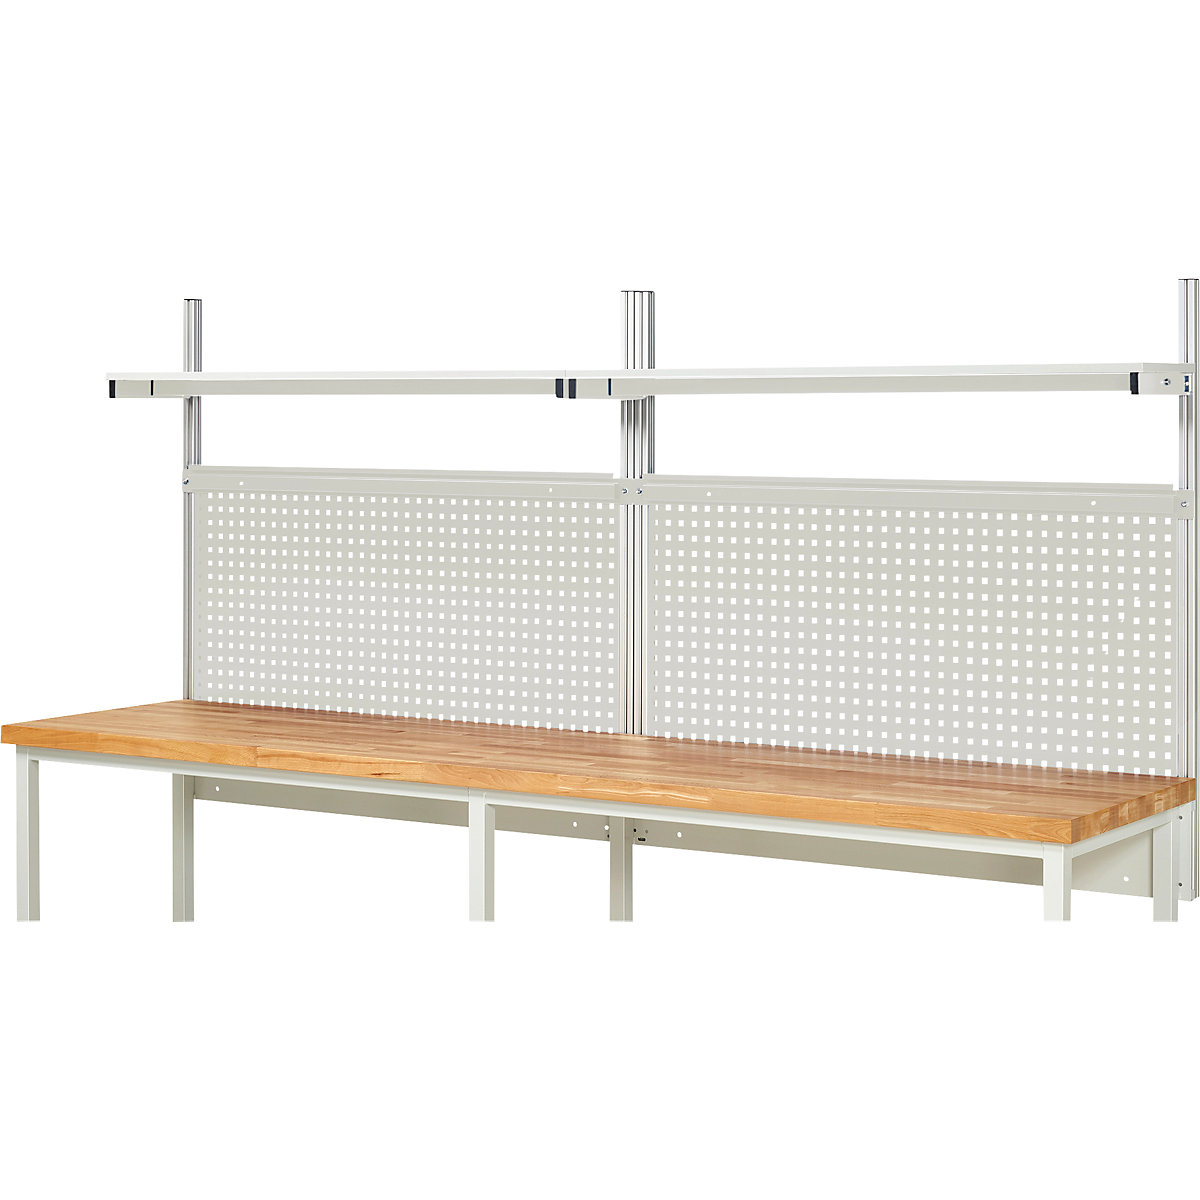 Complete modular system set 1 – RAU, for workbench, width 3000 mm